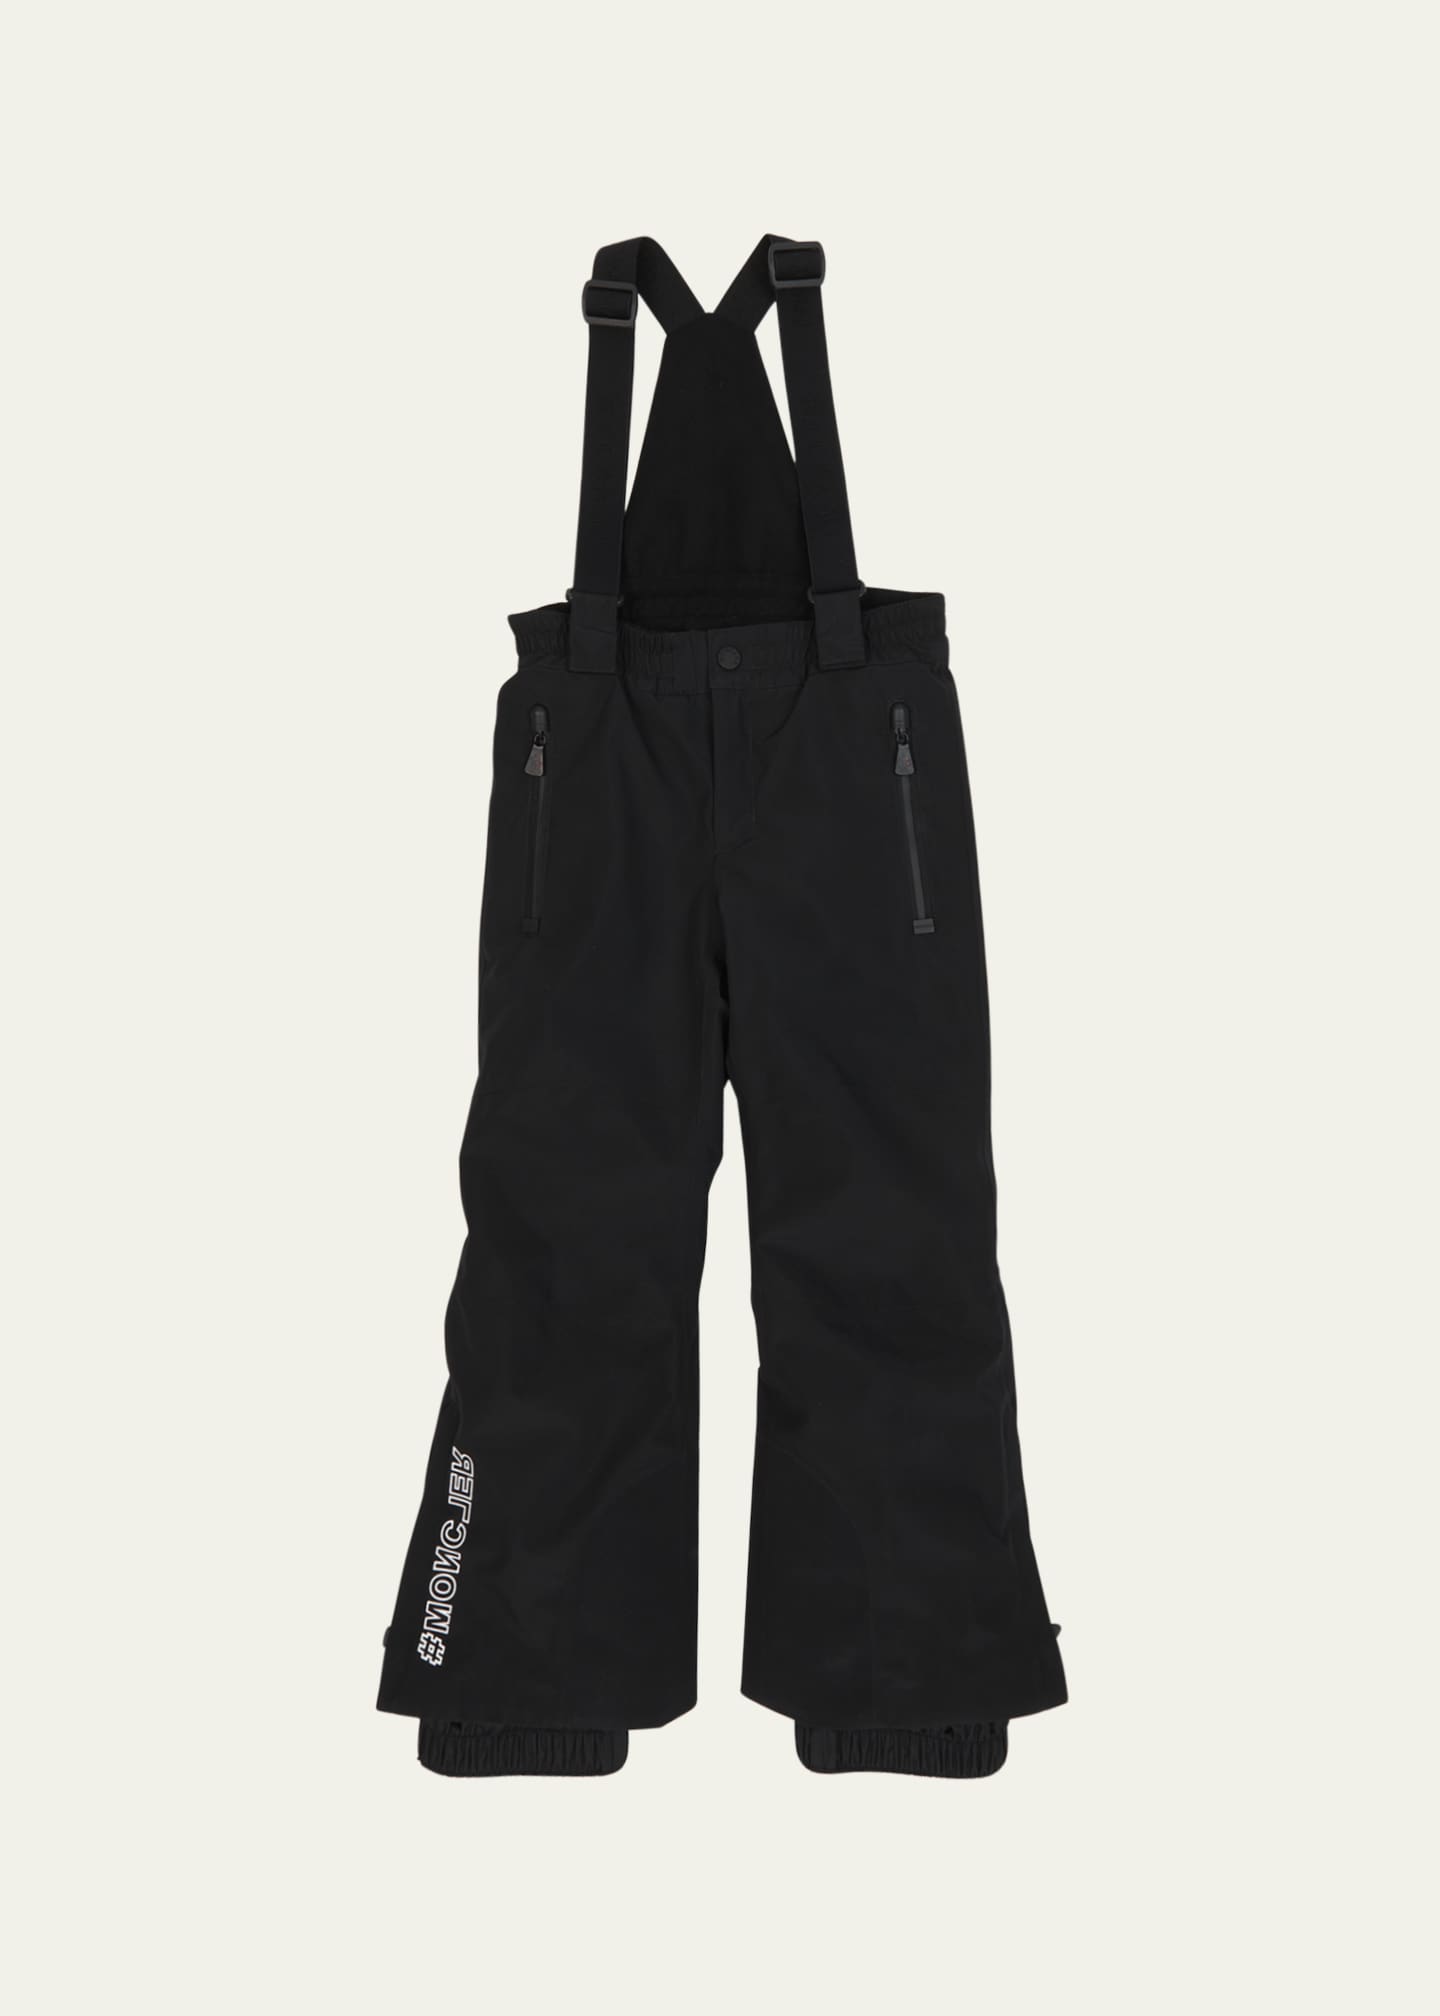 Moncler Grenoble Girl's Grenoble Ski Trousers, Size 8-14